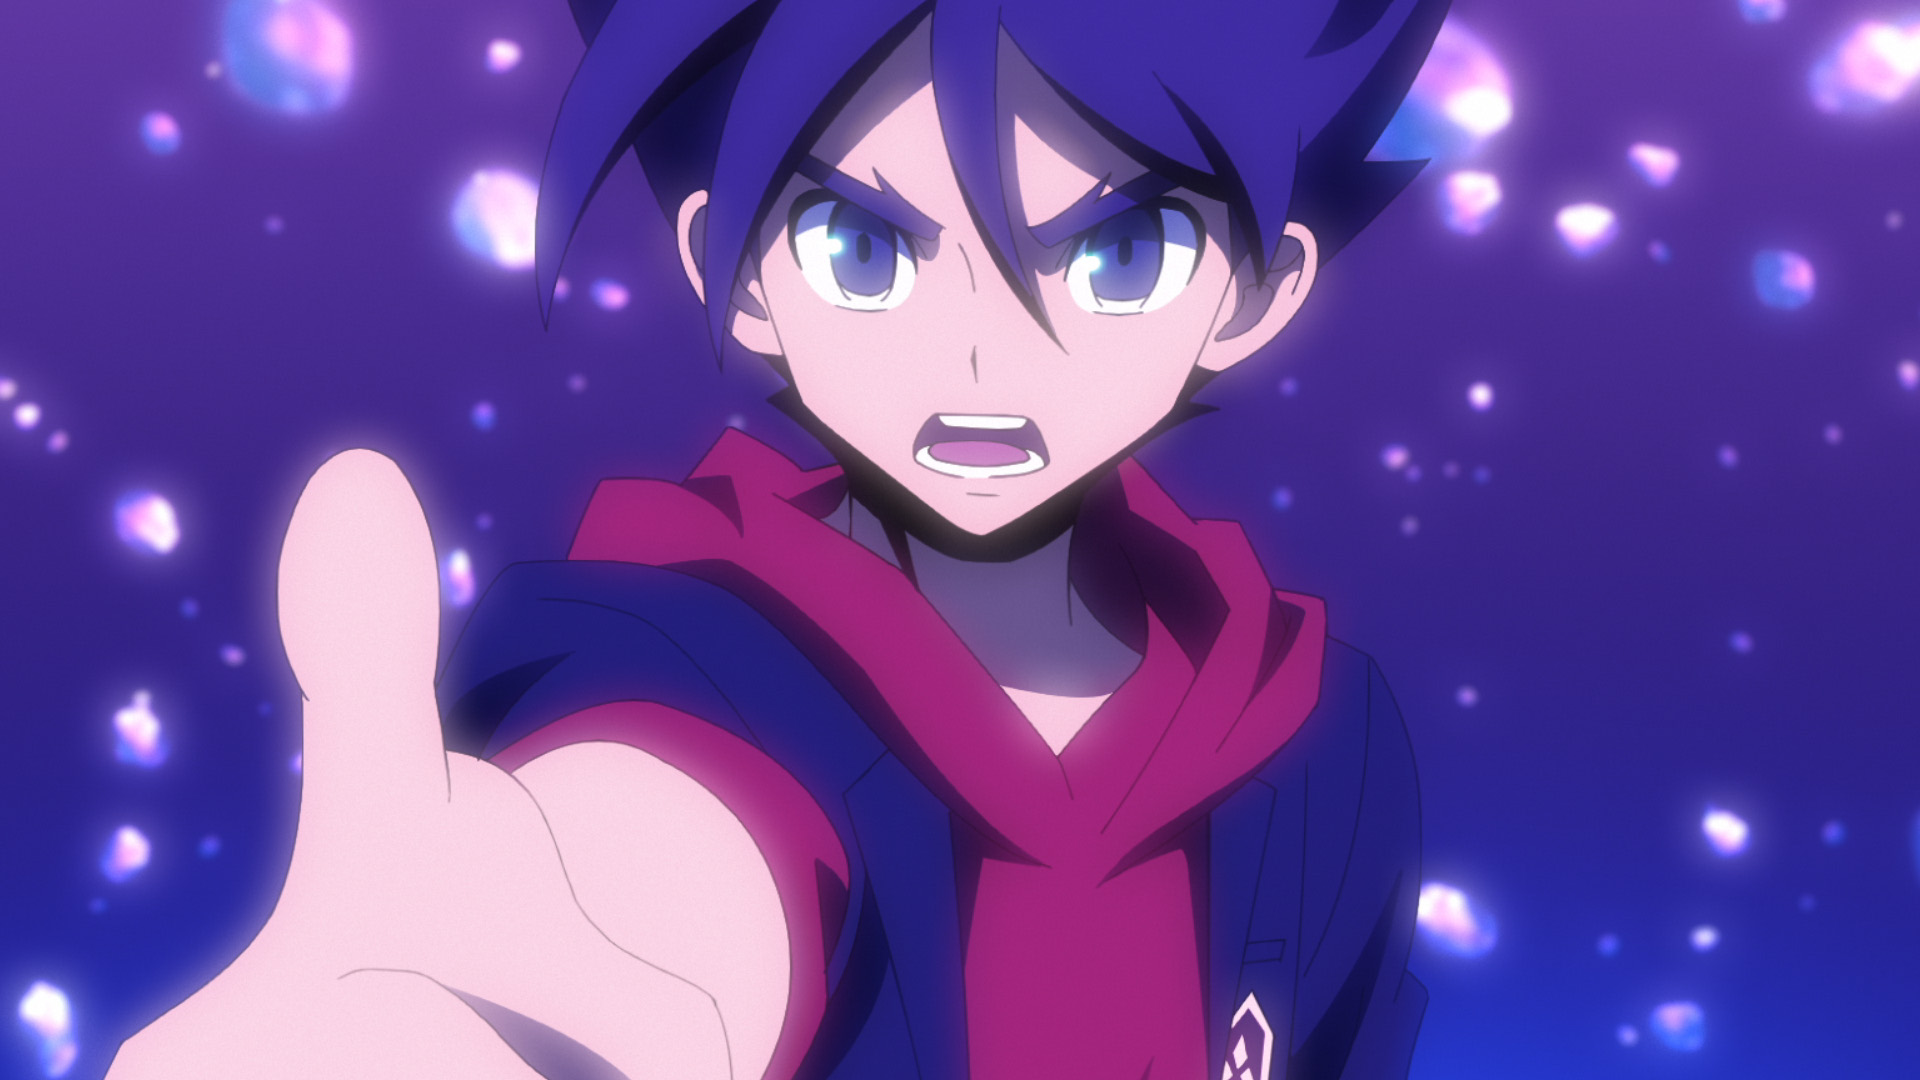 Megaton Musashi TV Anime Delays Episode 19 to Keep Up Quality